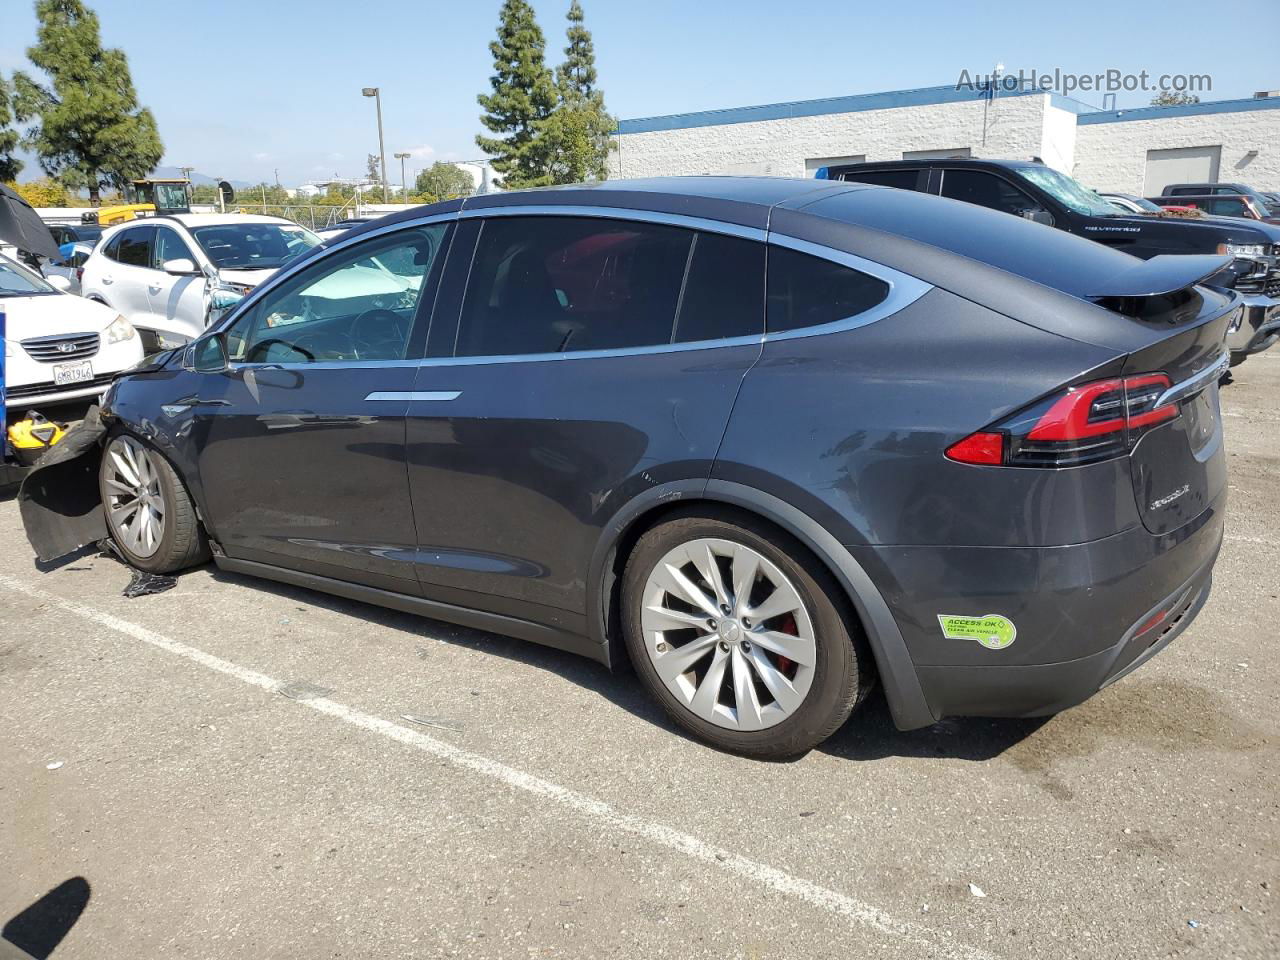 2016 Tesla Model X  Gray vin: 5YJXCAE43GF001064